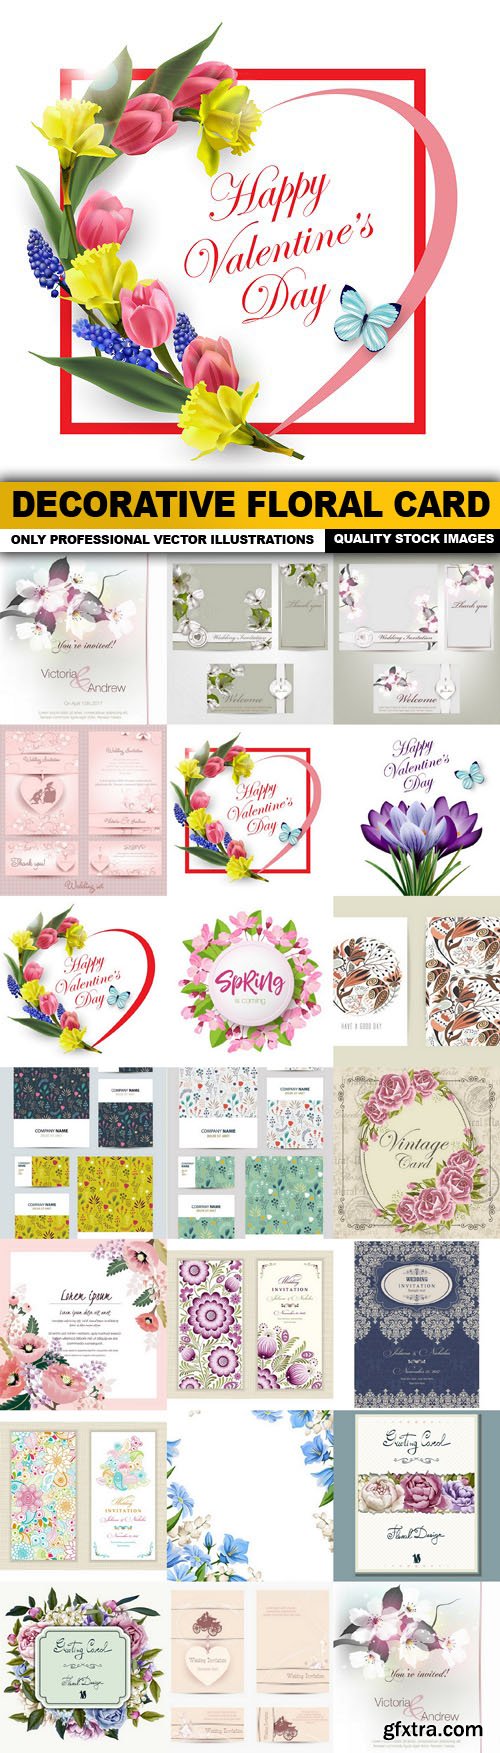 Decorative Floral Card - 20 Vector